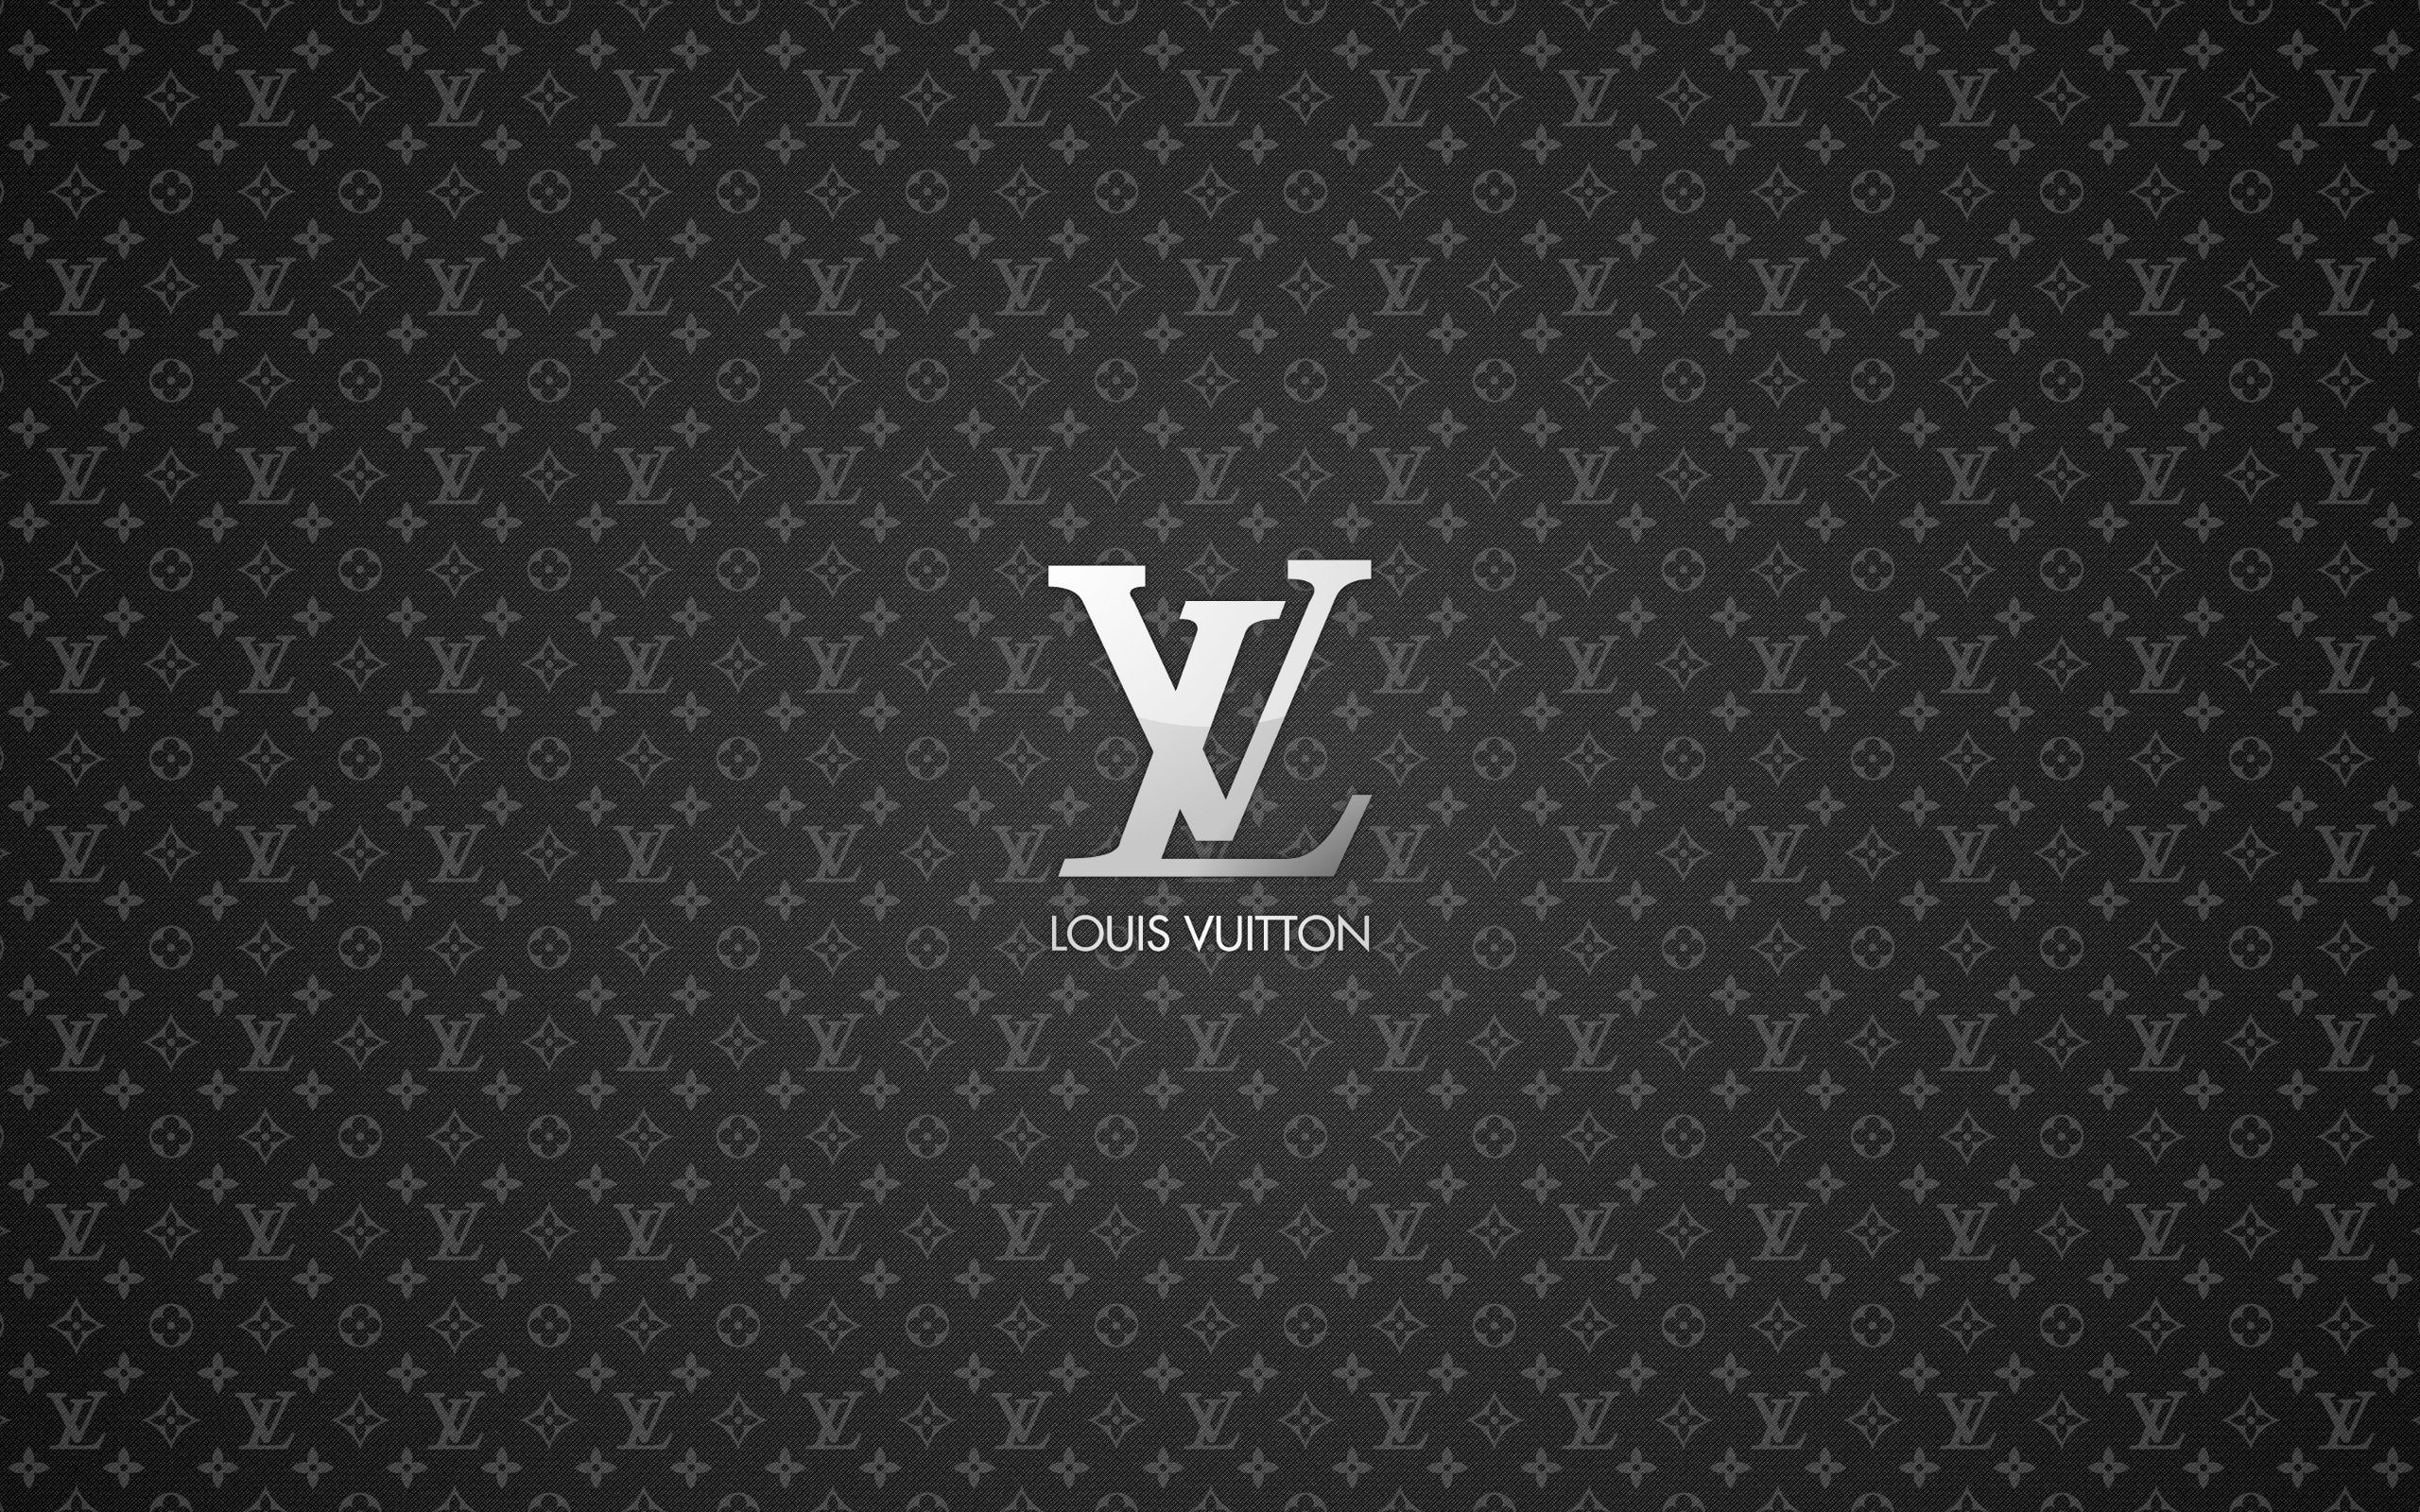 Lv, Loui vuitton, Louis vuitton, Logo, Symbol, pattern, sign